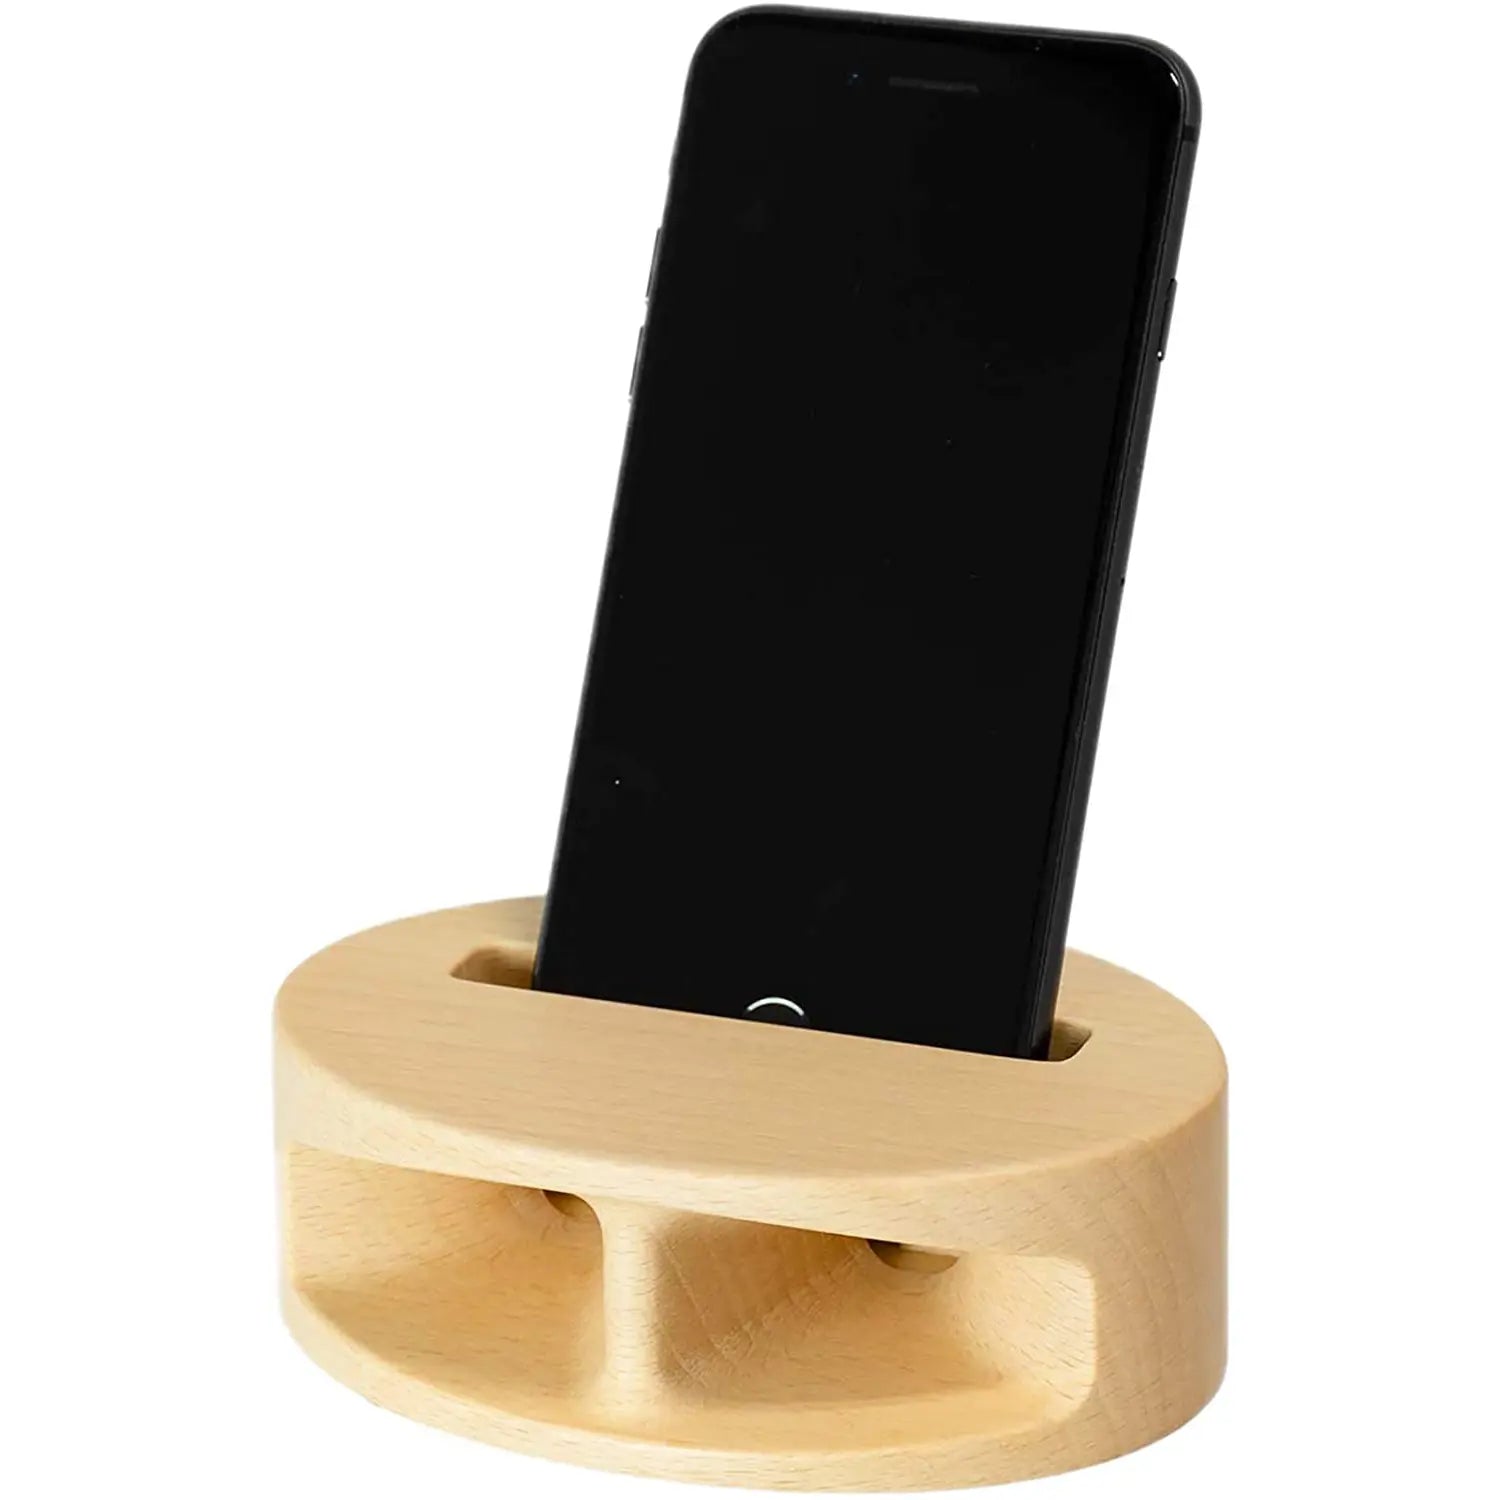 MUKUNE iPhone用 無電源 木製スピーカー 充電可能タイプ ブナ